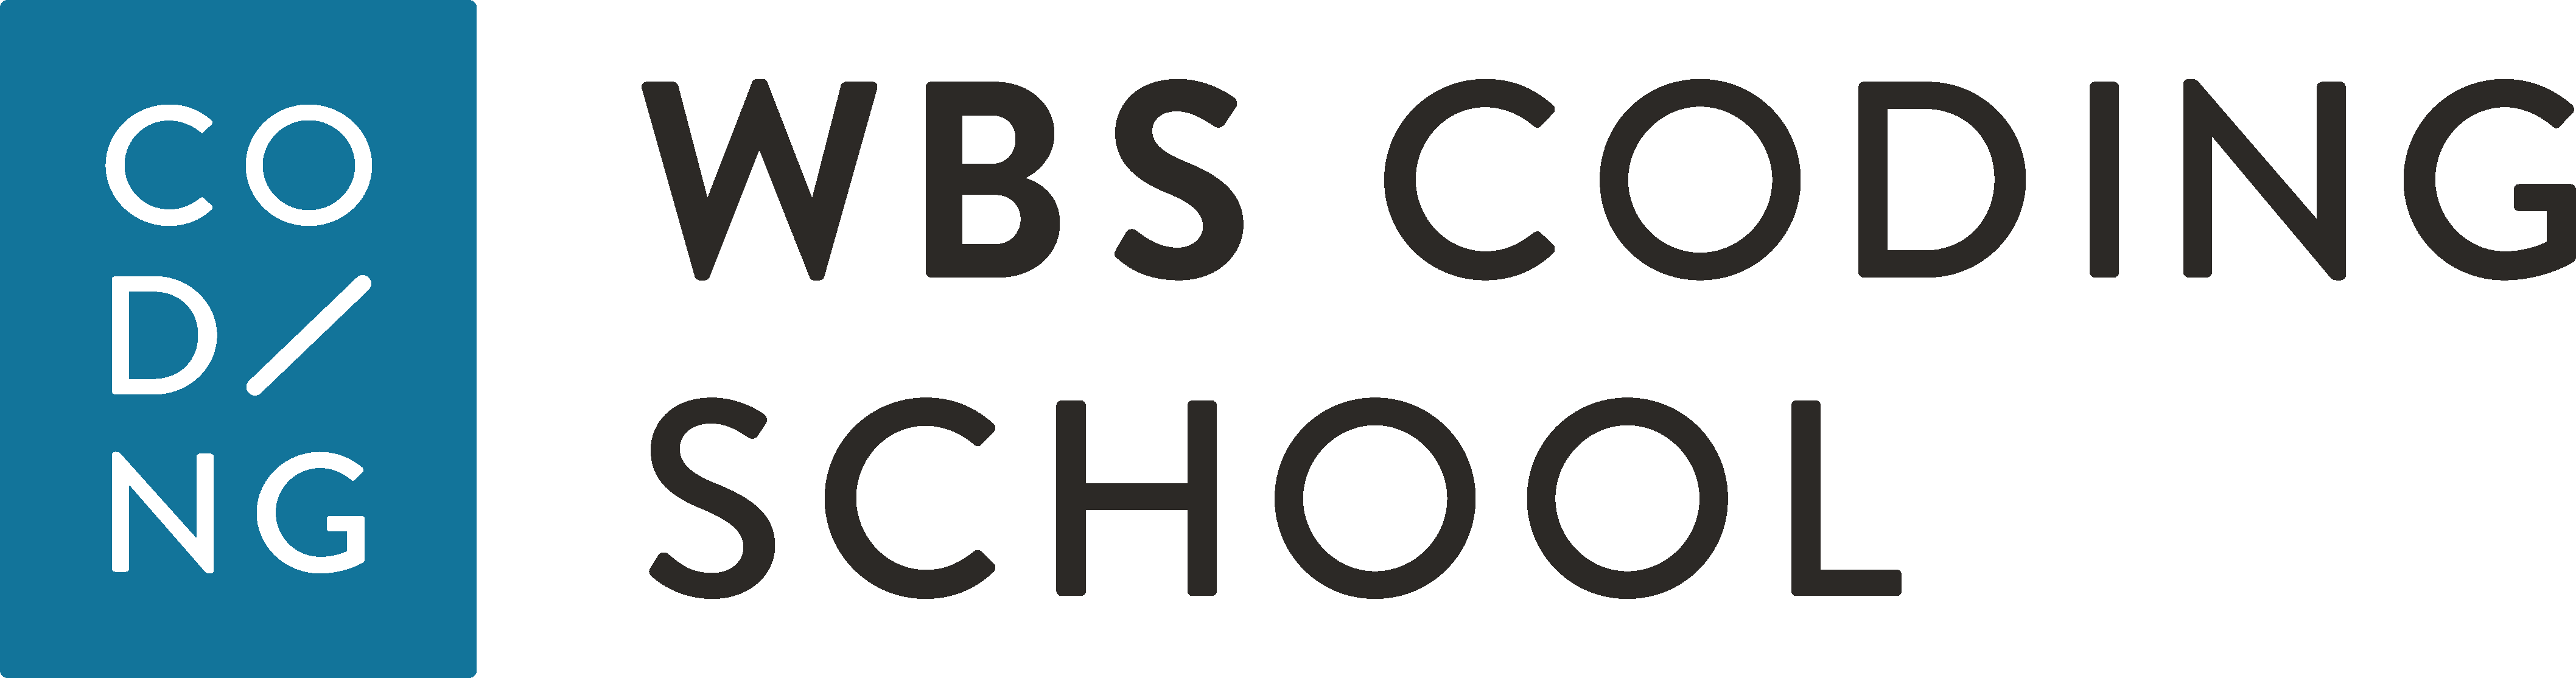 WBS Coding School